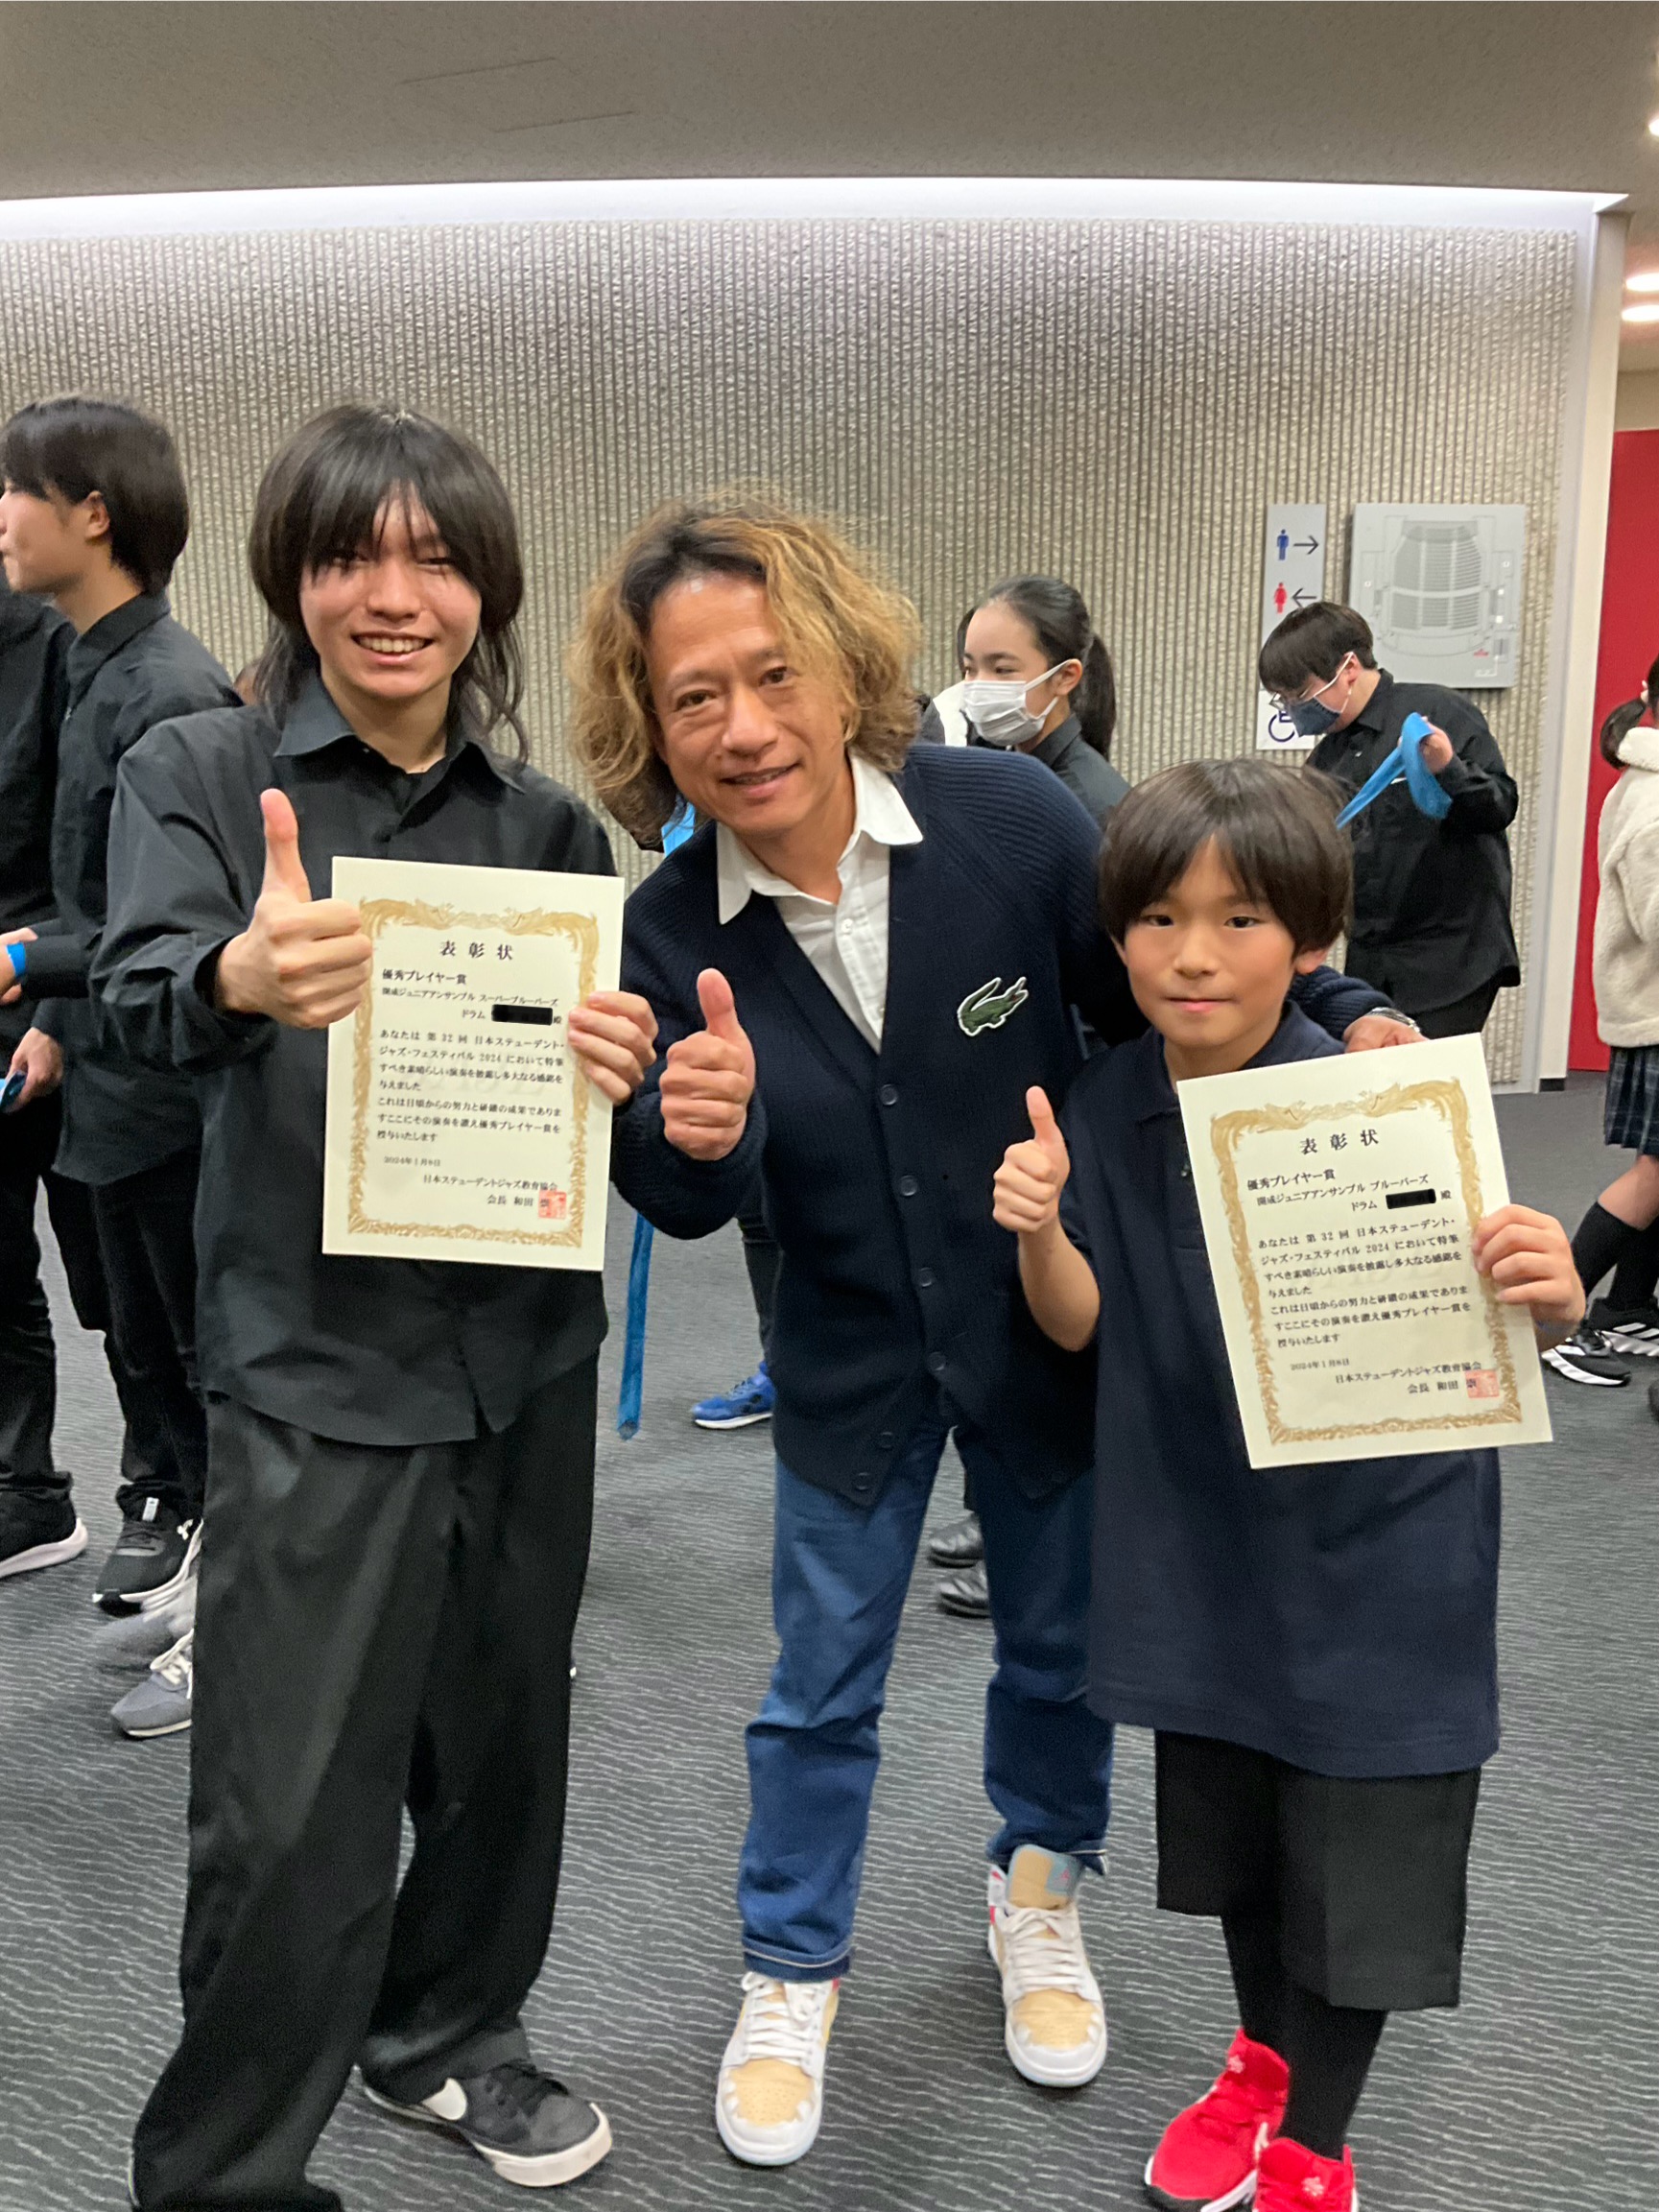 Kimura Music Studioの生徒二人が優秀プレーヤー賞を受賞しました。